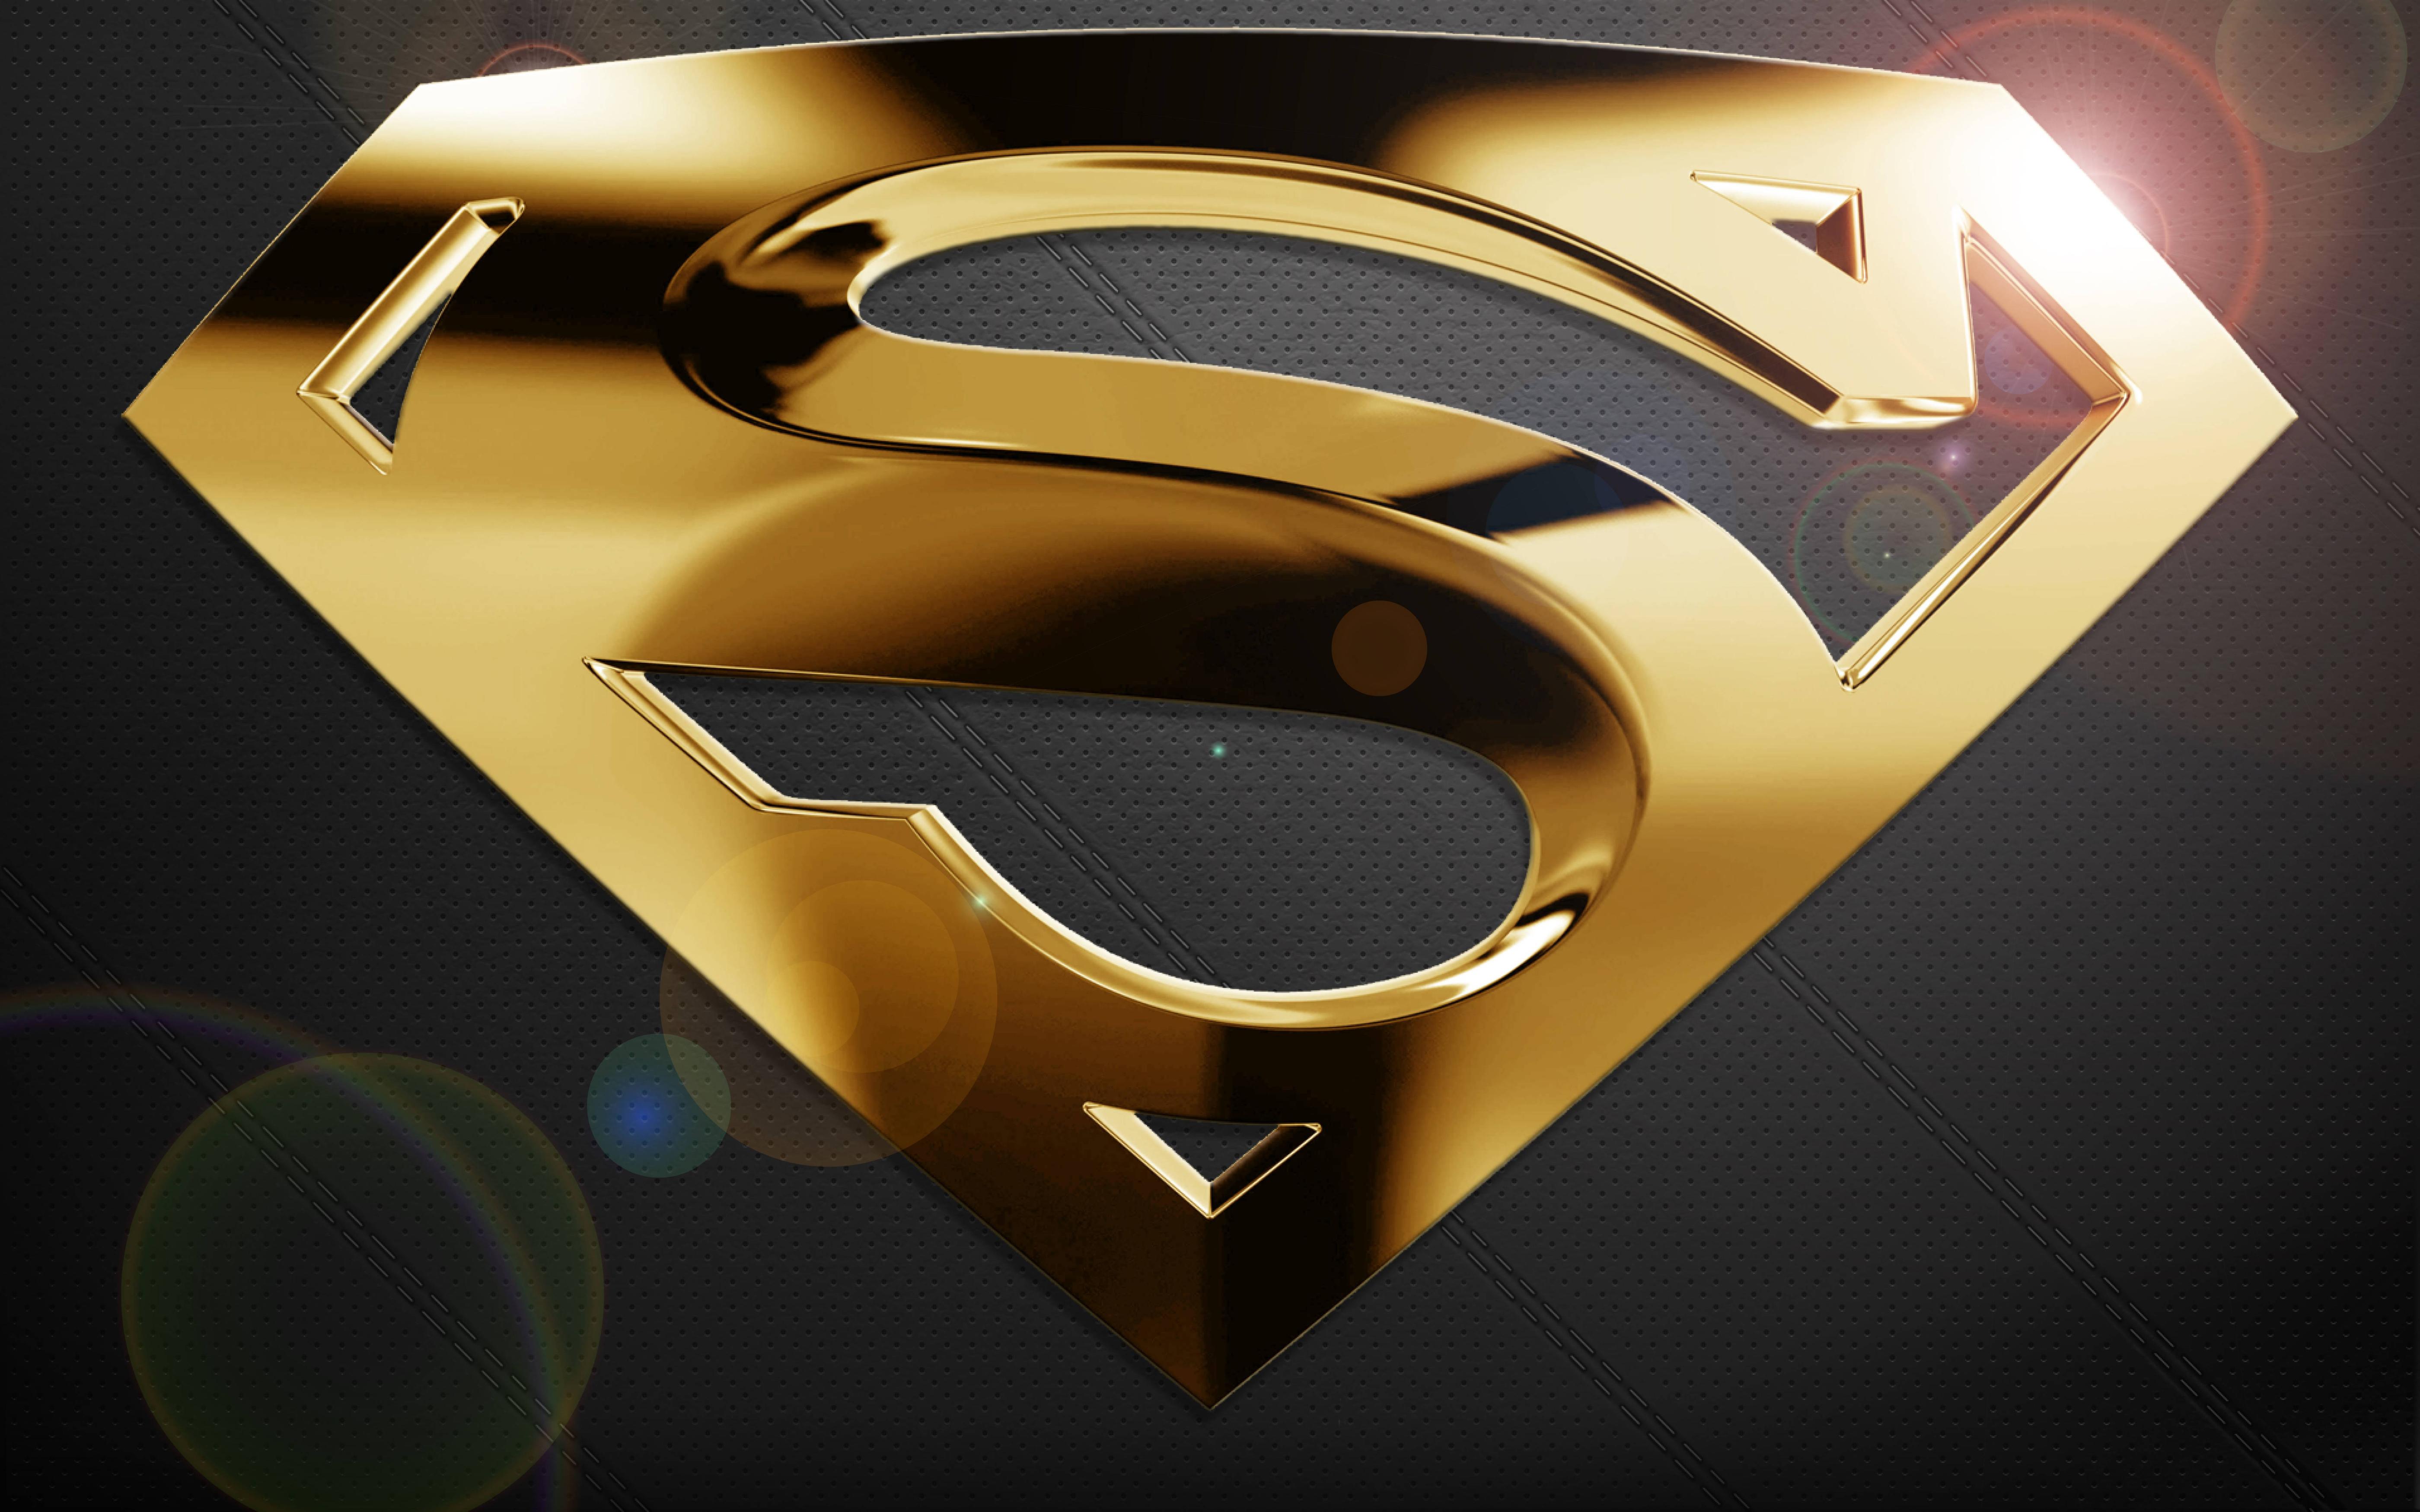 Black Superman Logo Wallpaper Image & Picture